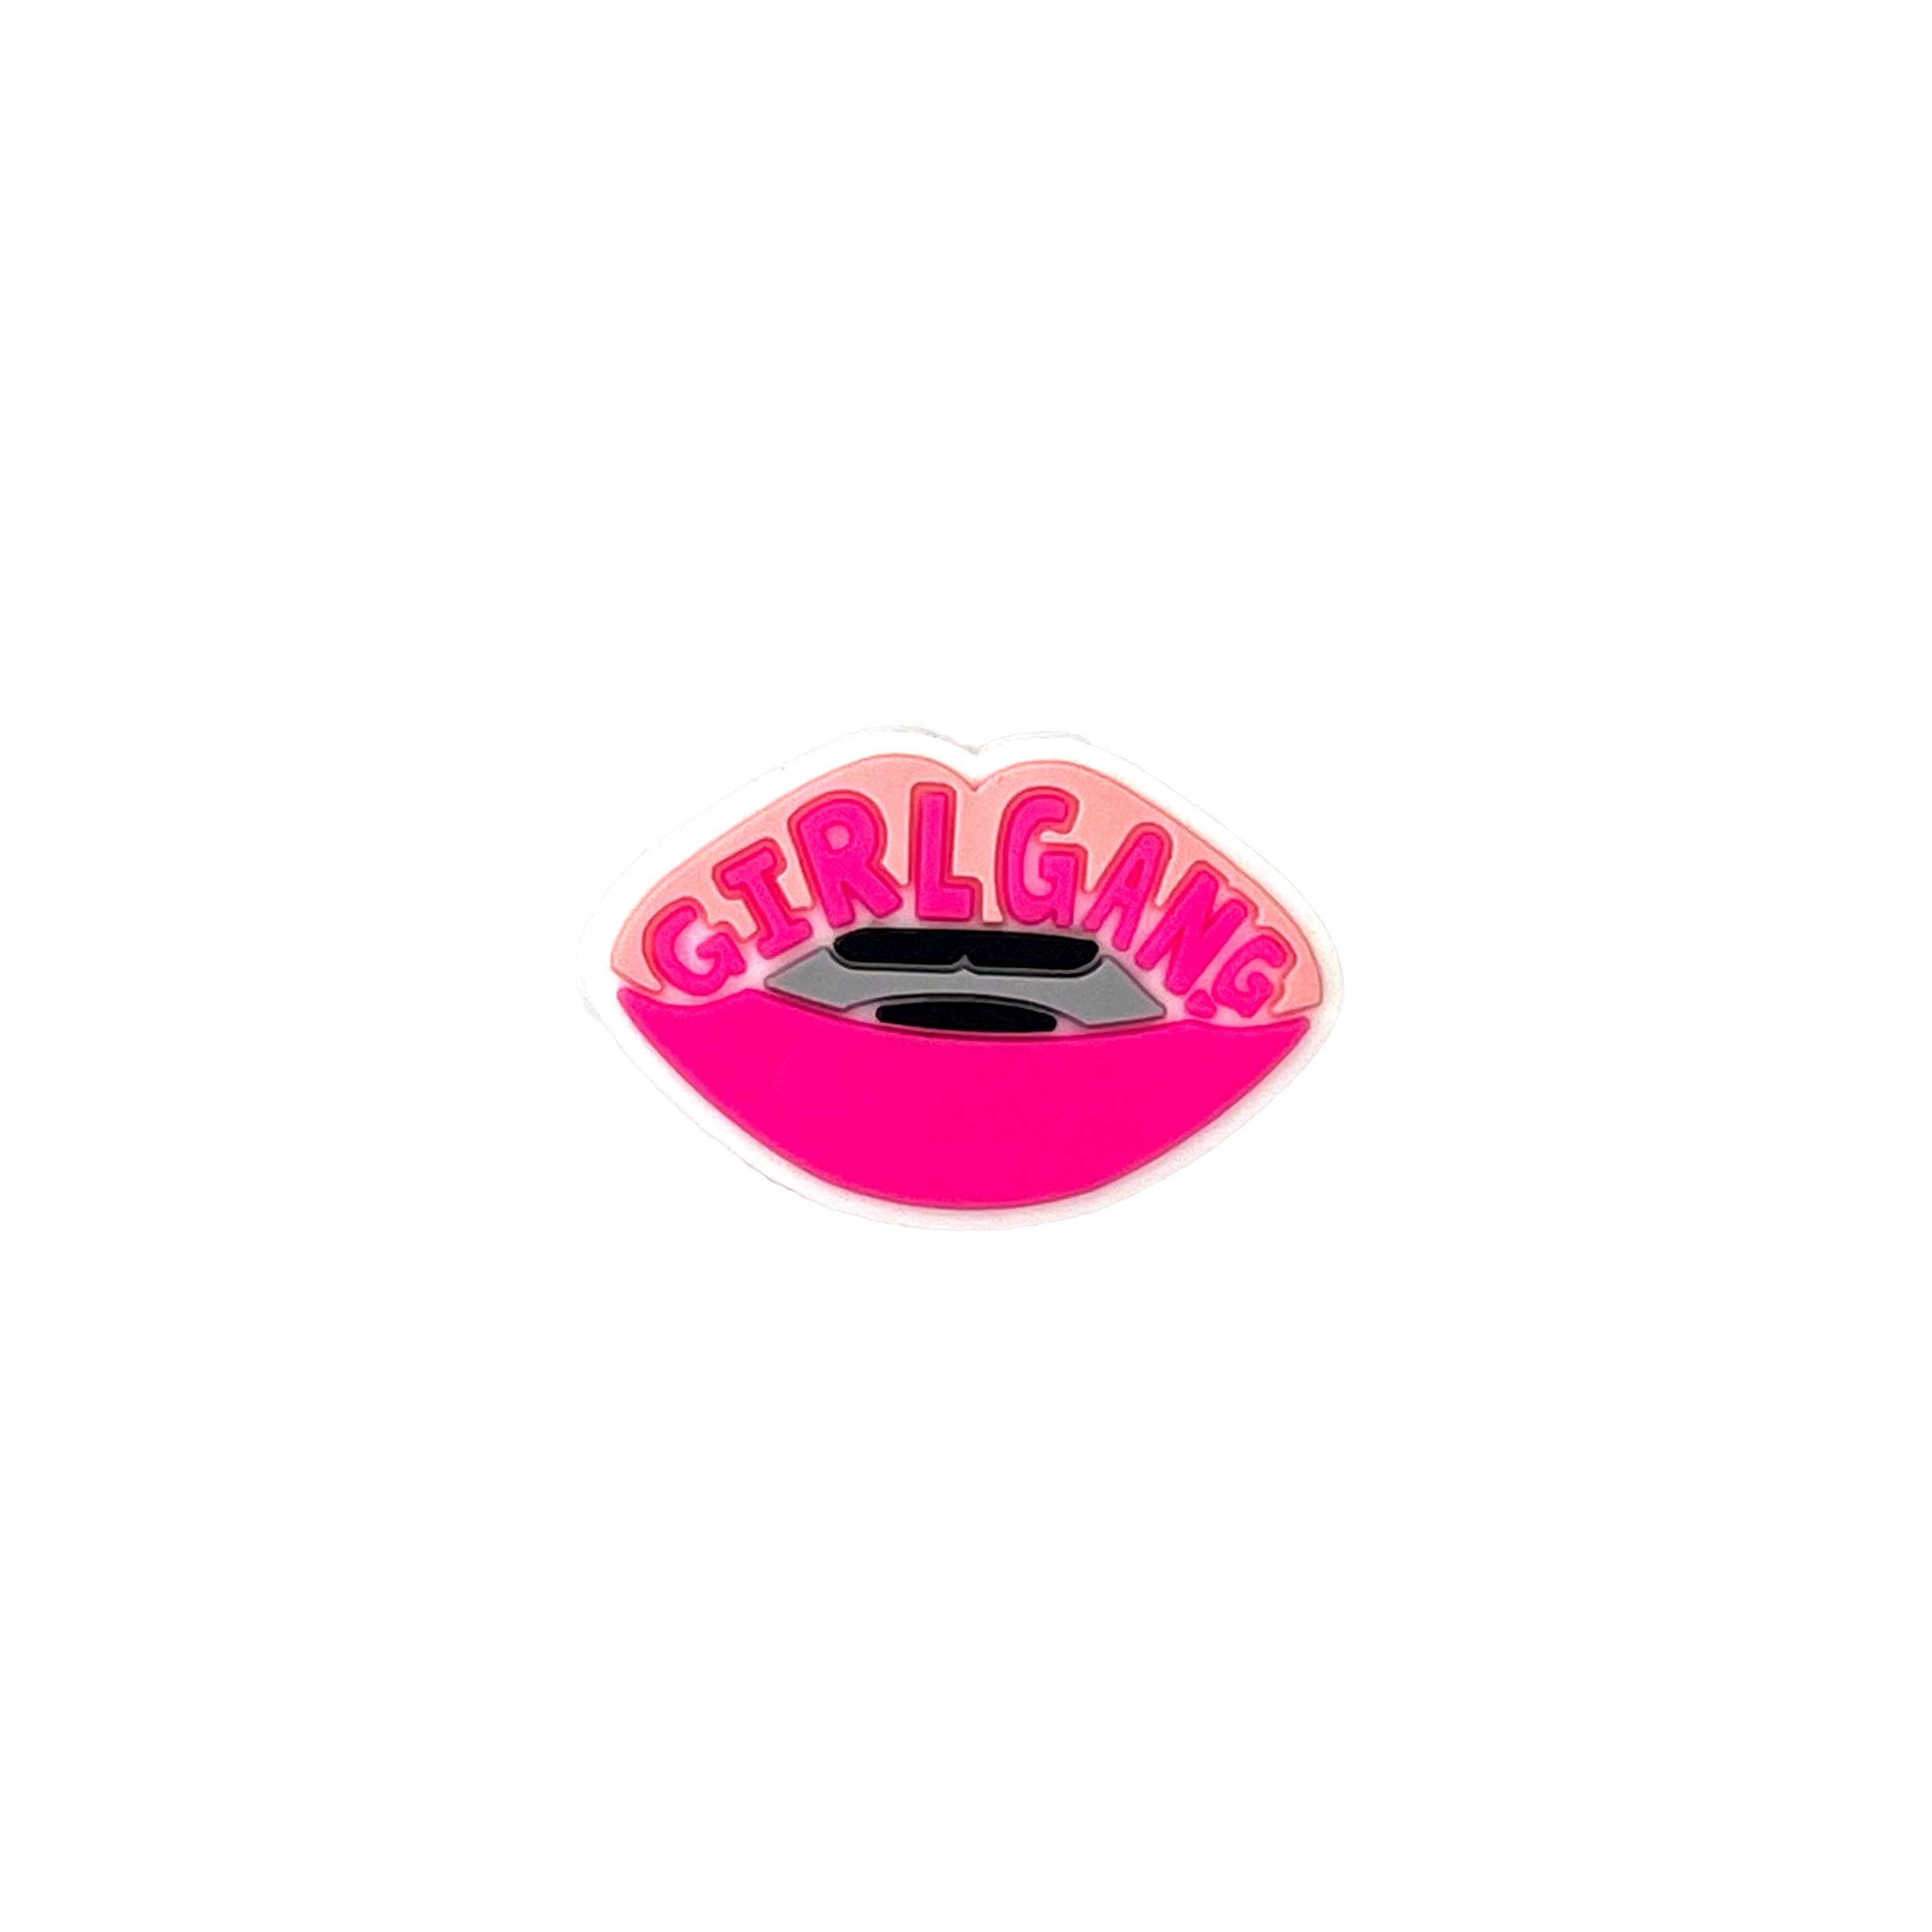 Pink Lips 2